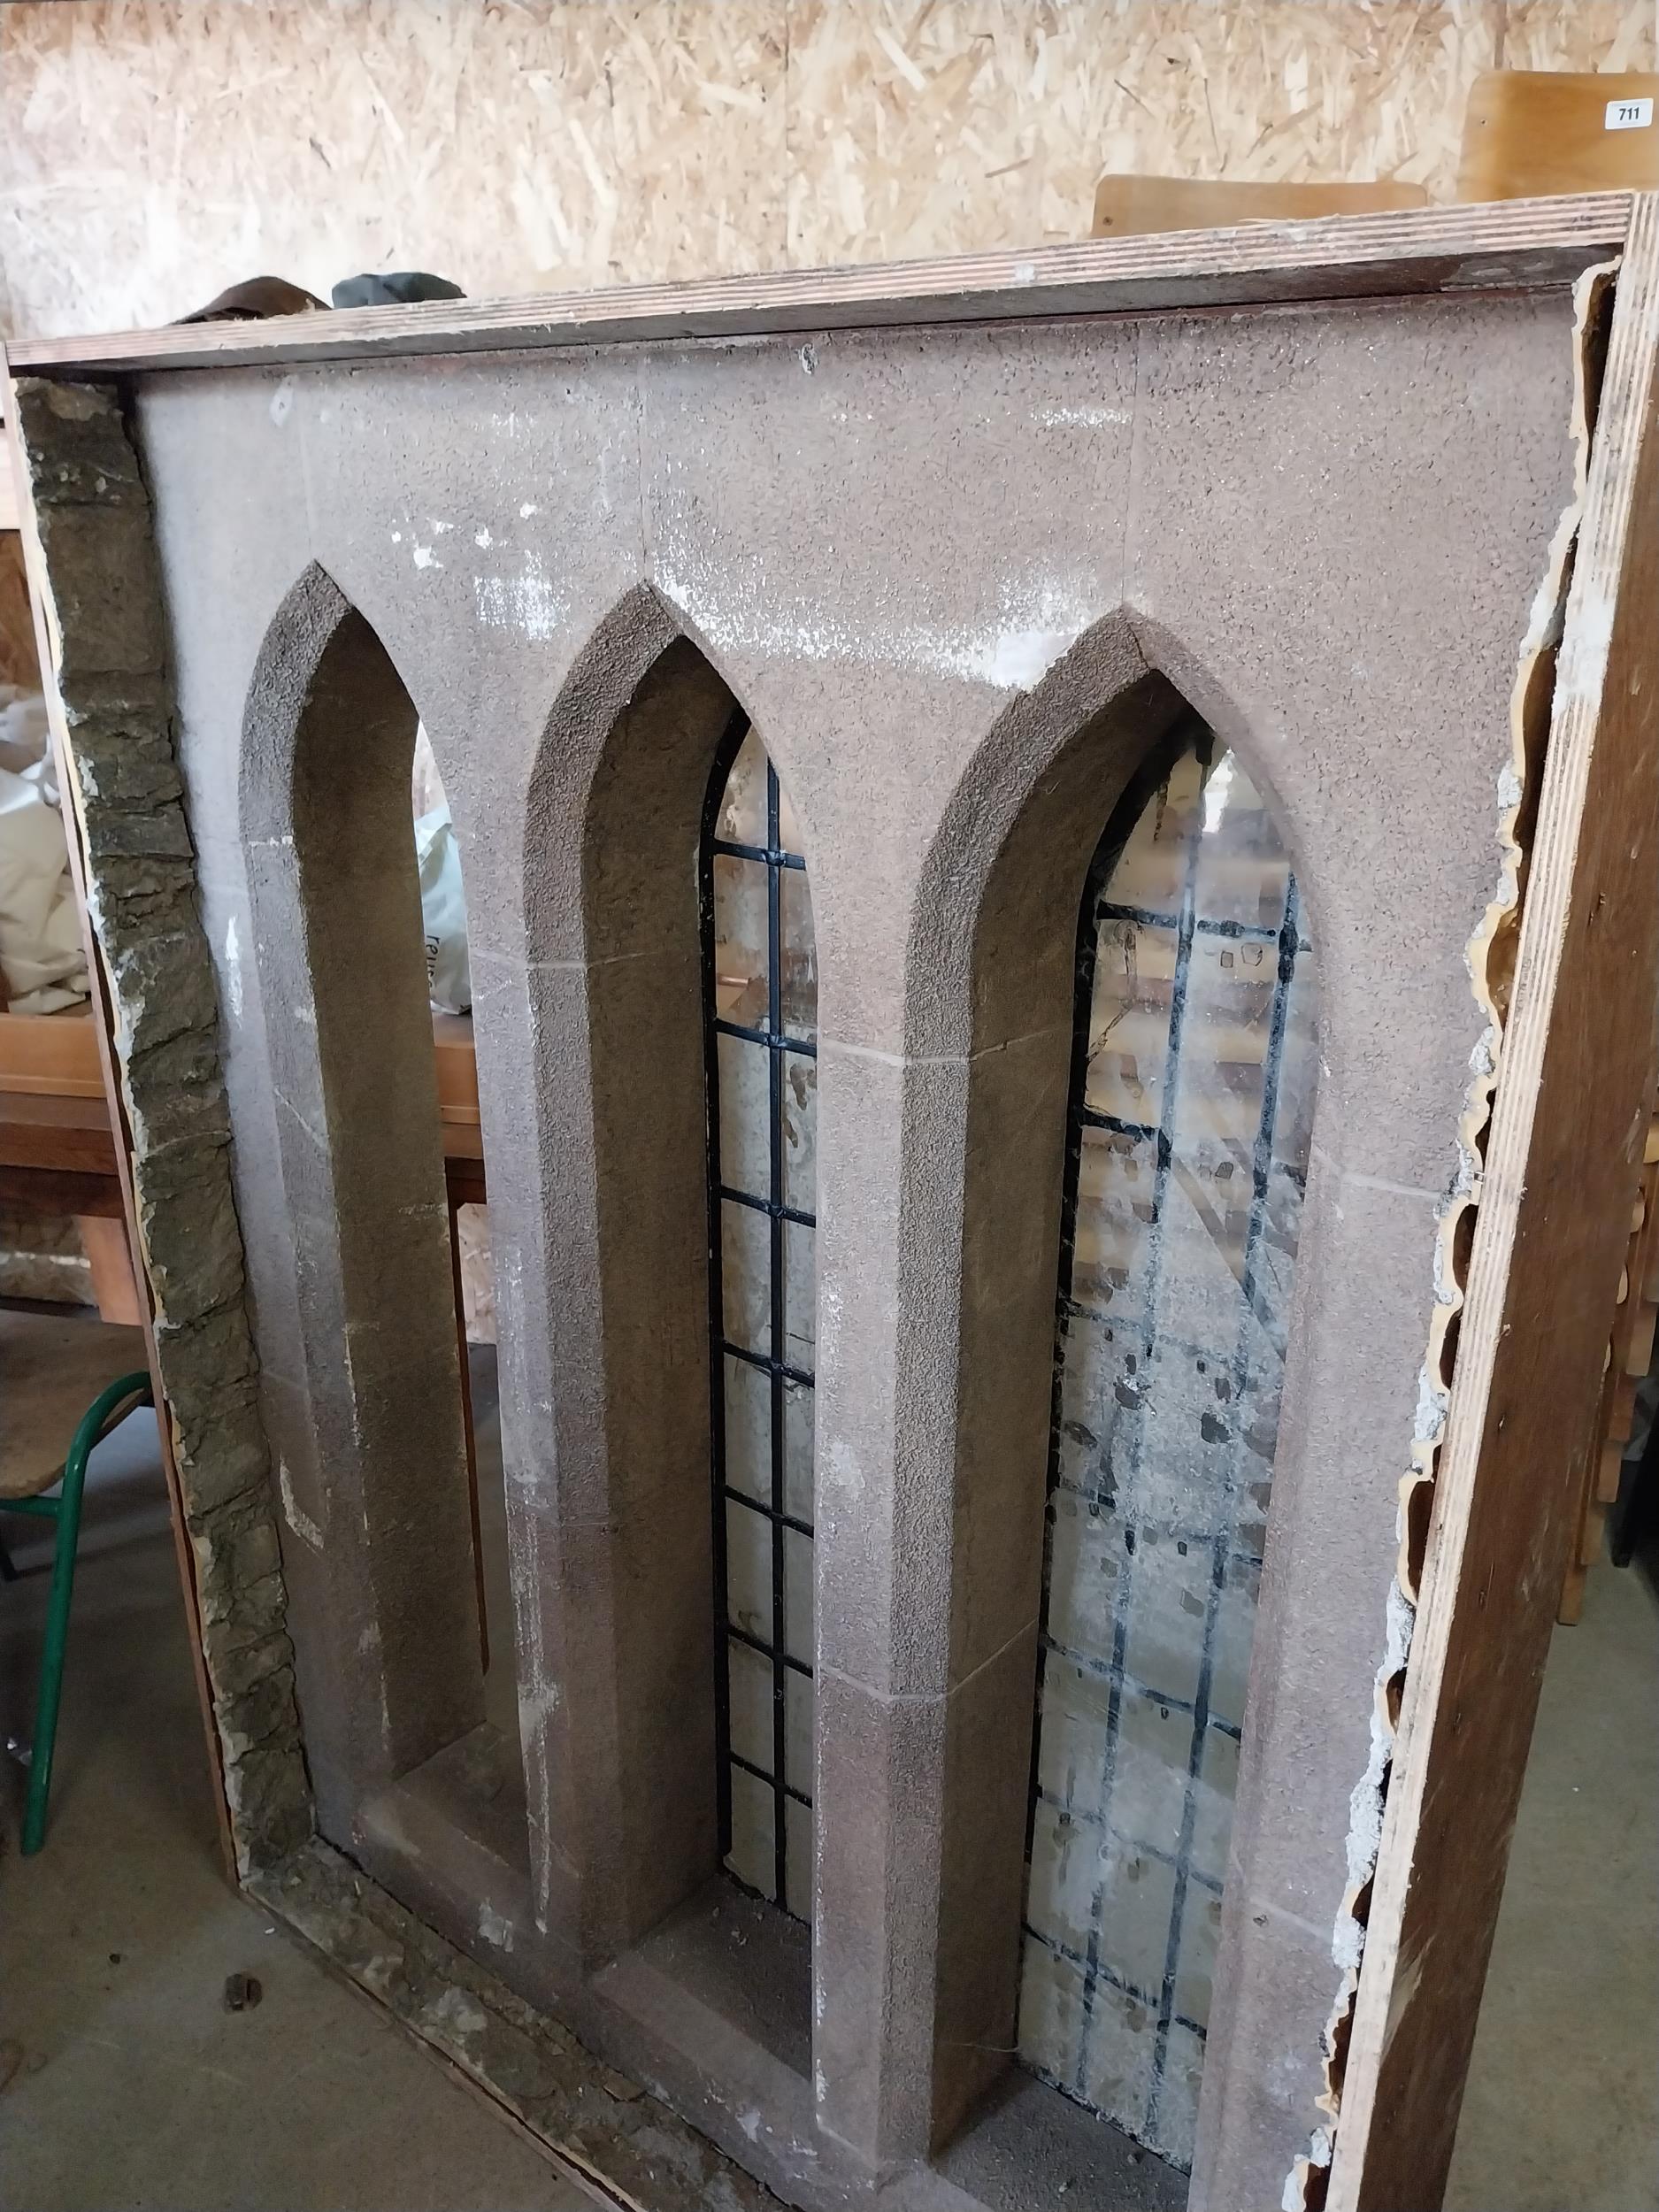 Film prop fibre glass window in the Gothic style with glass panels {156 cm H x 124 cm W x 26 cm D}. - Image 3 of 3